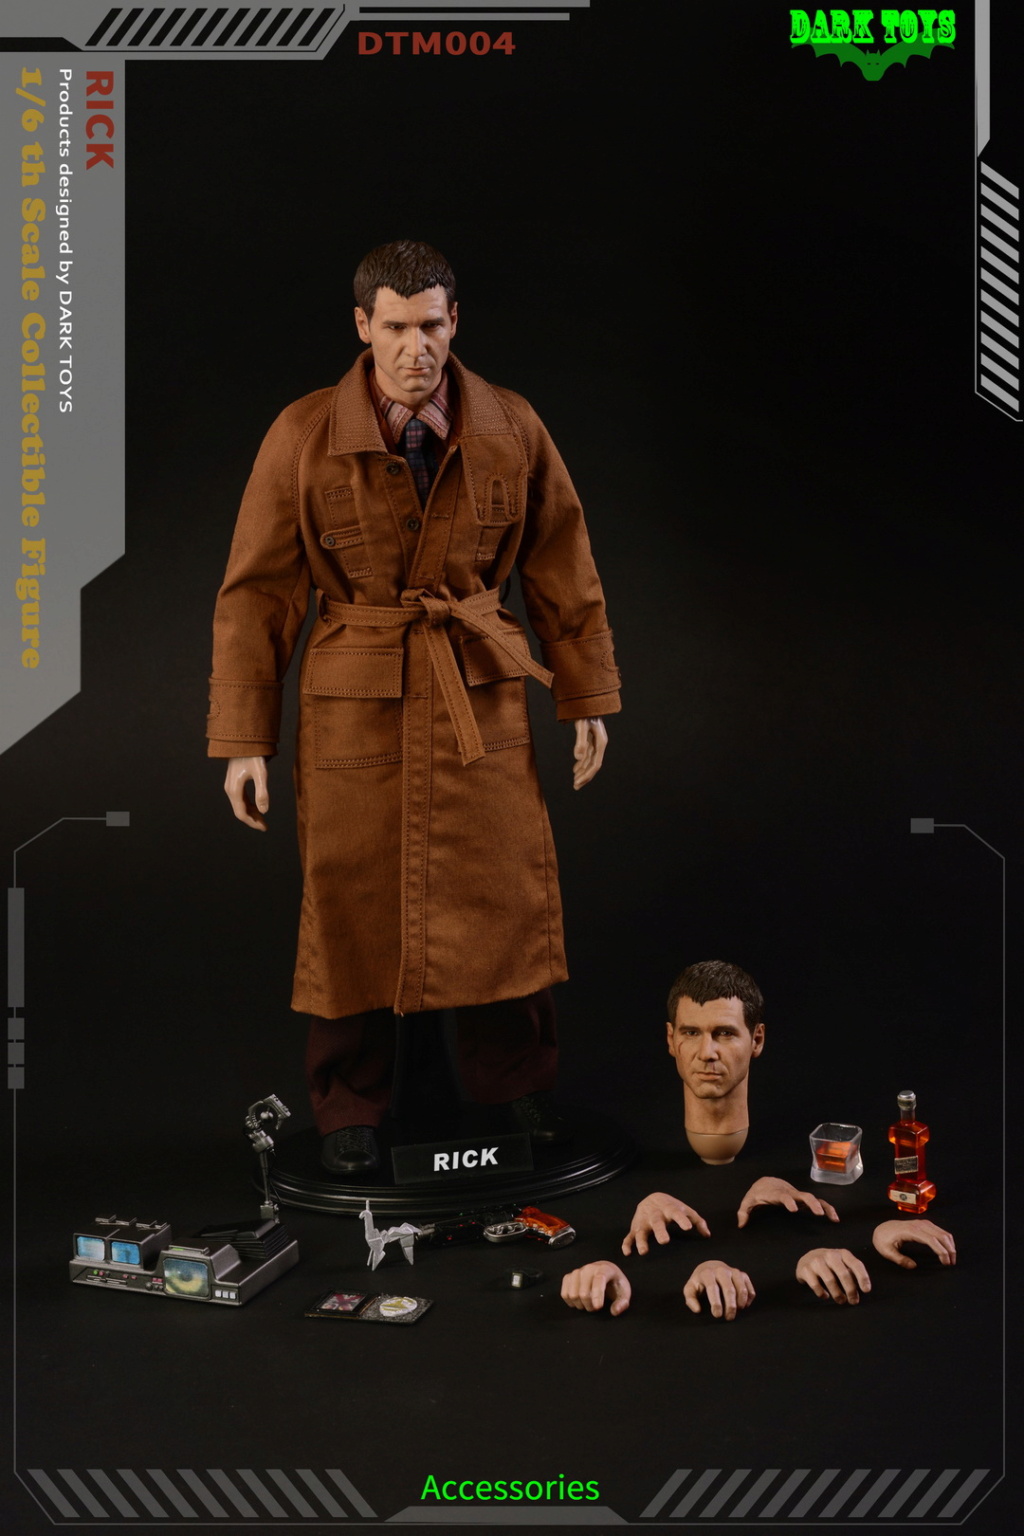 Sci-fi - NEW PRODUCT: Dark Toys: 1/6 Blade Runner Rick Luxury Set Action Figure #DTM004 10315